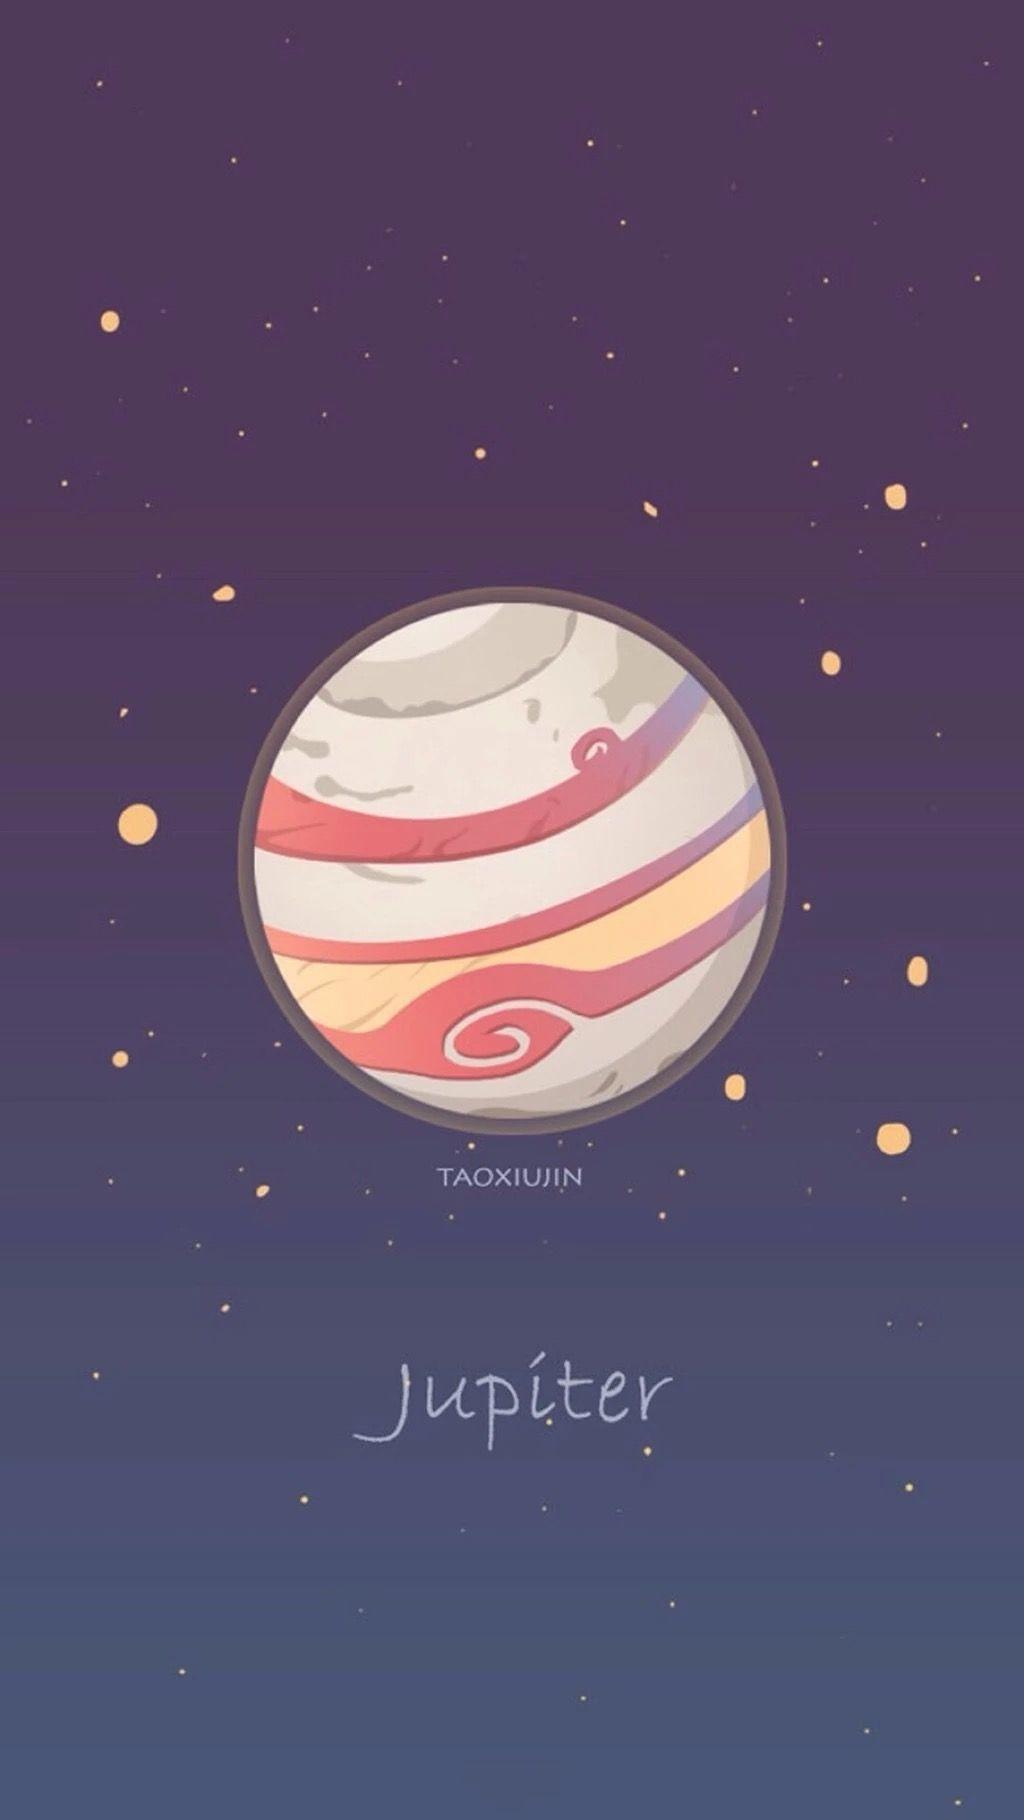 Jupiter. Planets wallpaper, Galaxy wallpaper, iPhone wallpaper